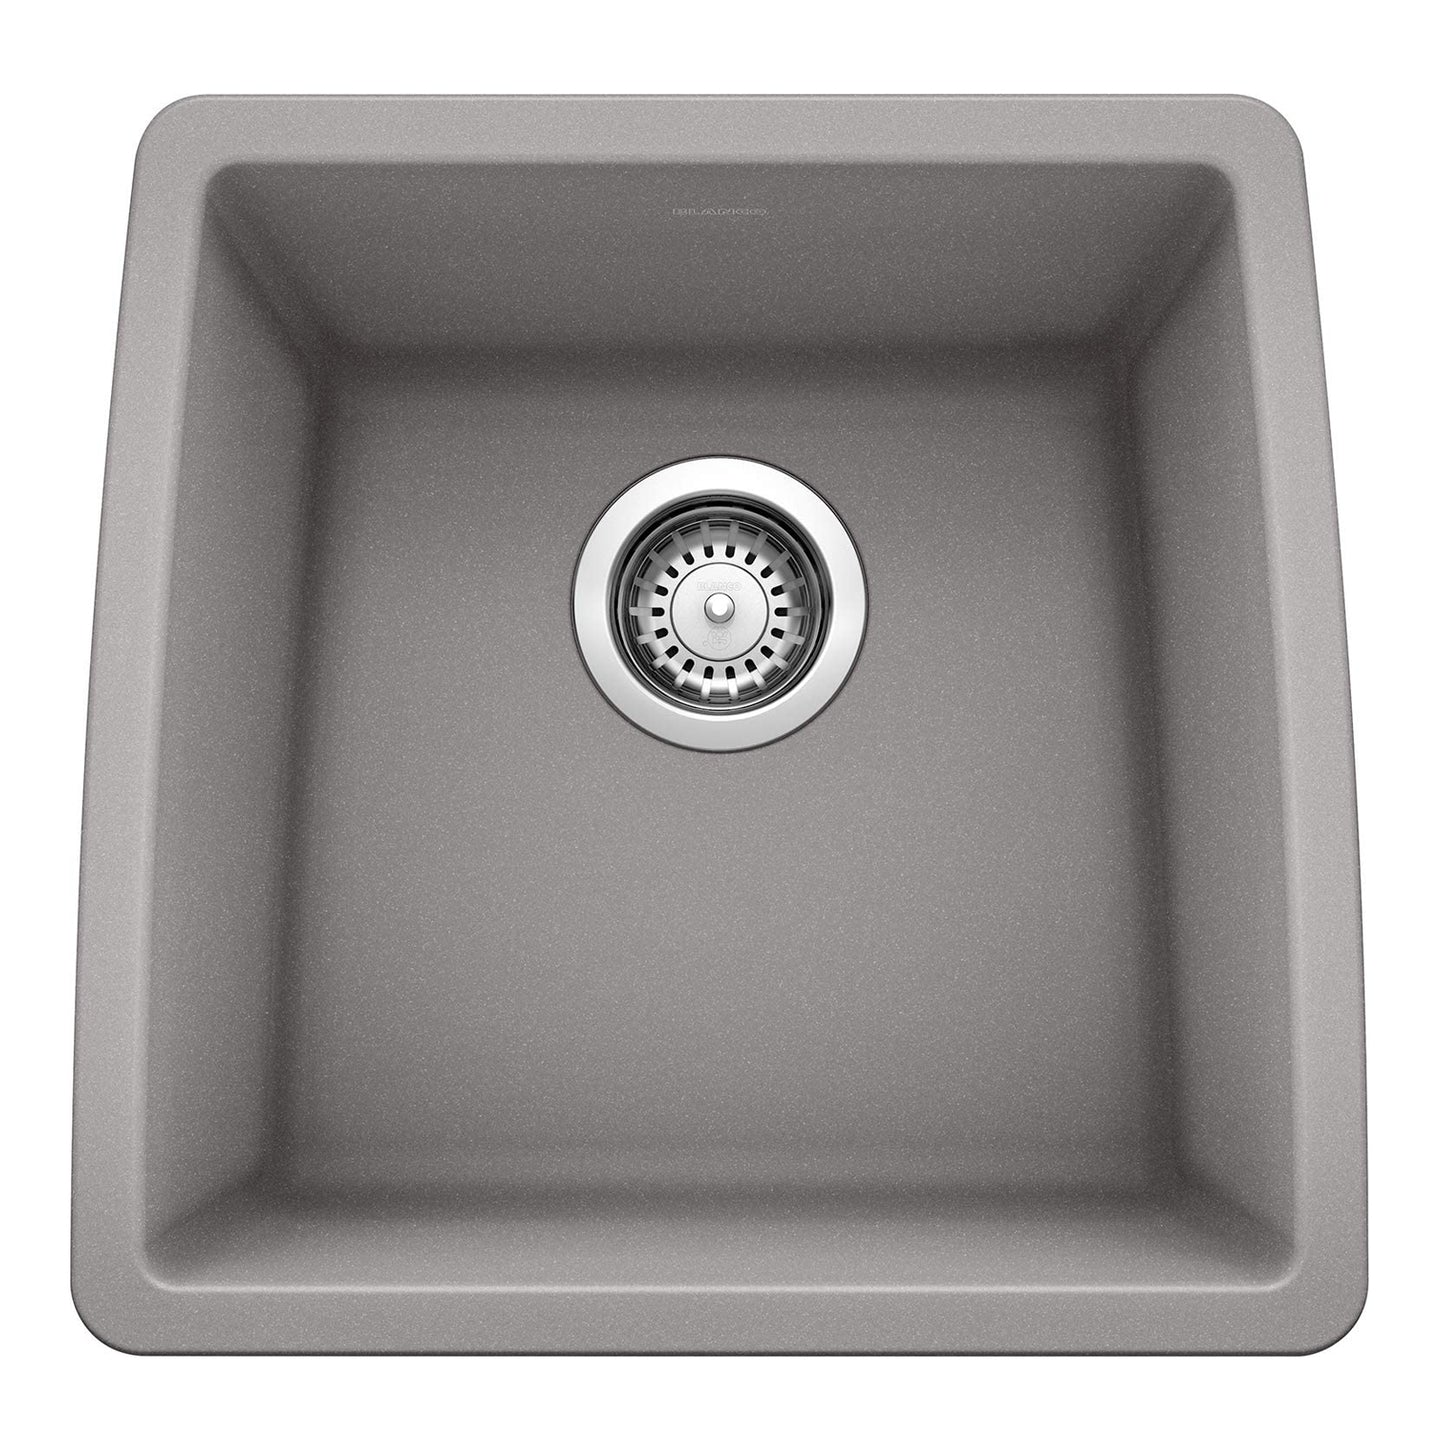 440082 - 17.5" x 17" Performa Undermount Bar Sink - Metallic Gray